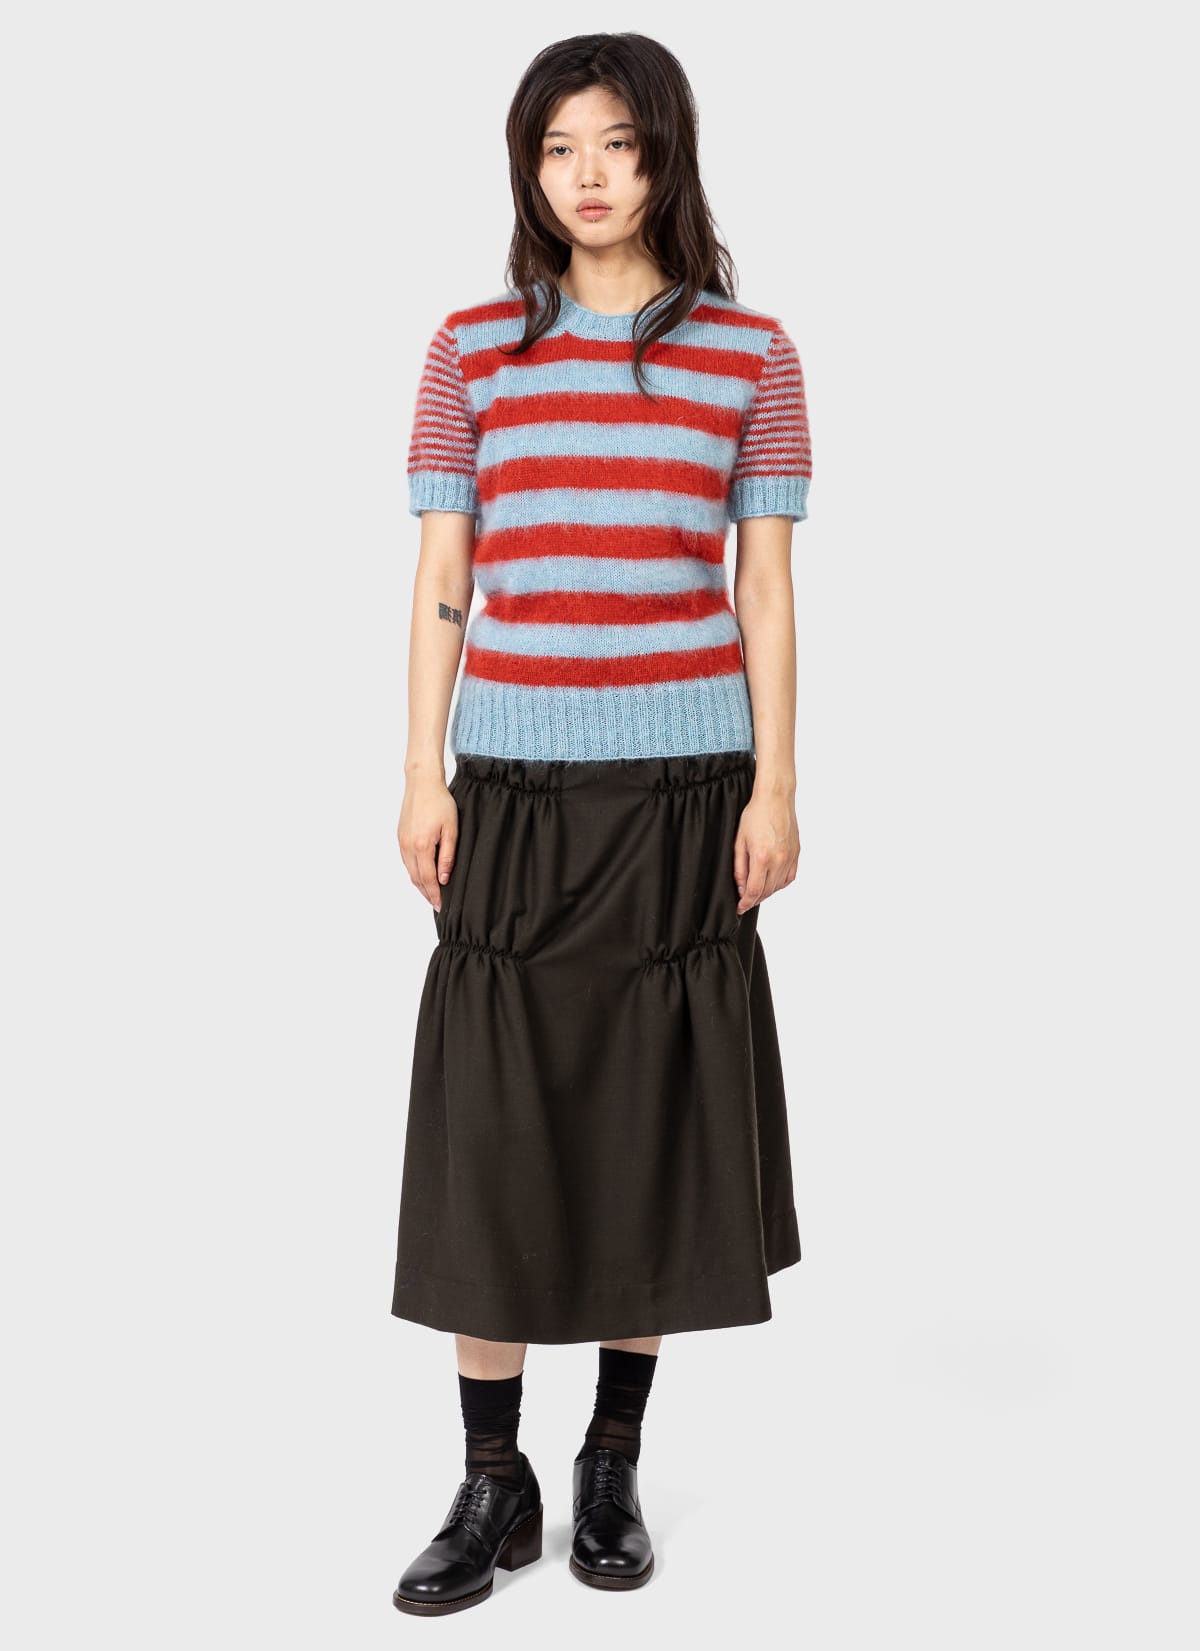 Ilana Blumberg Mohair Stripe T-Shirt